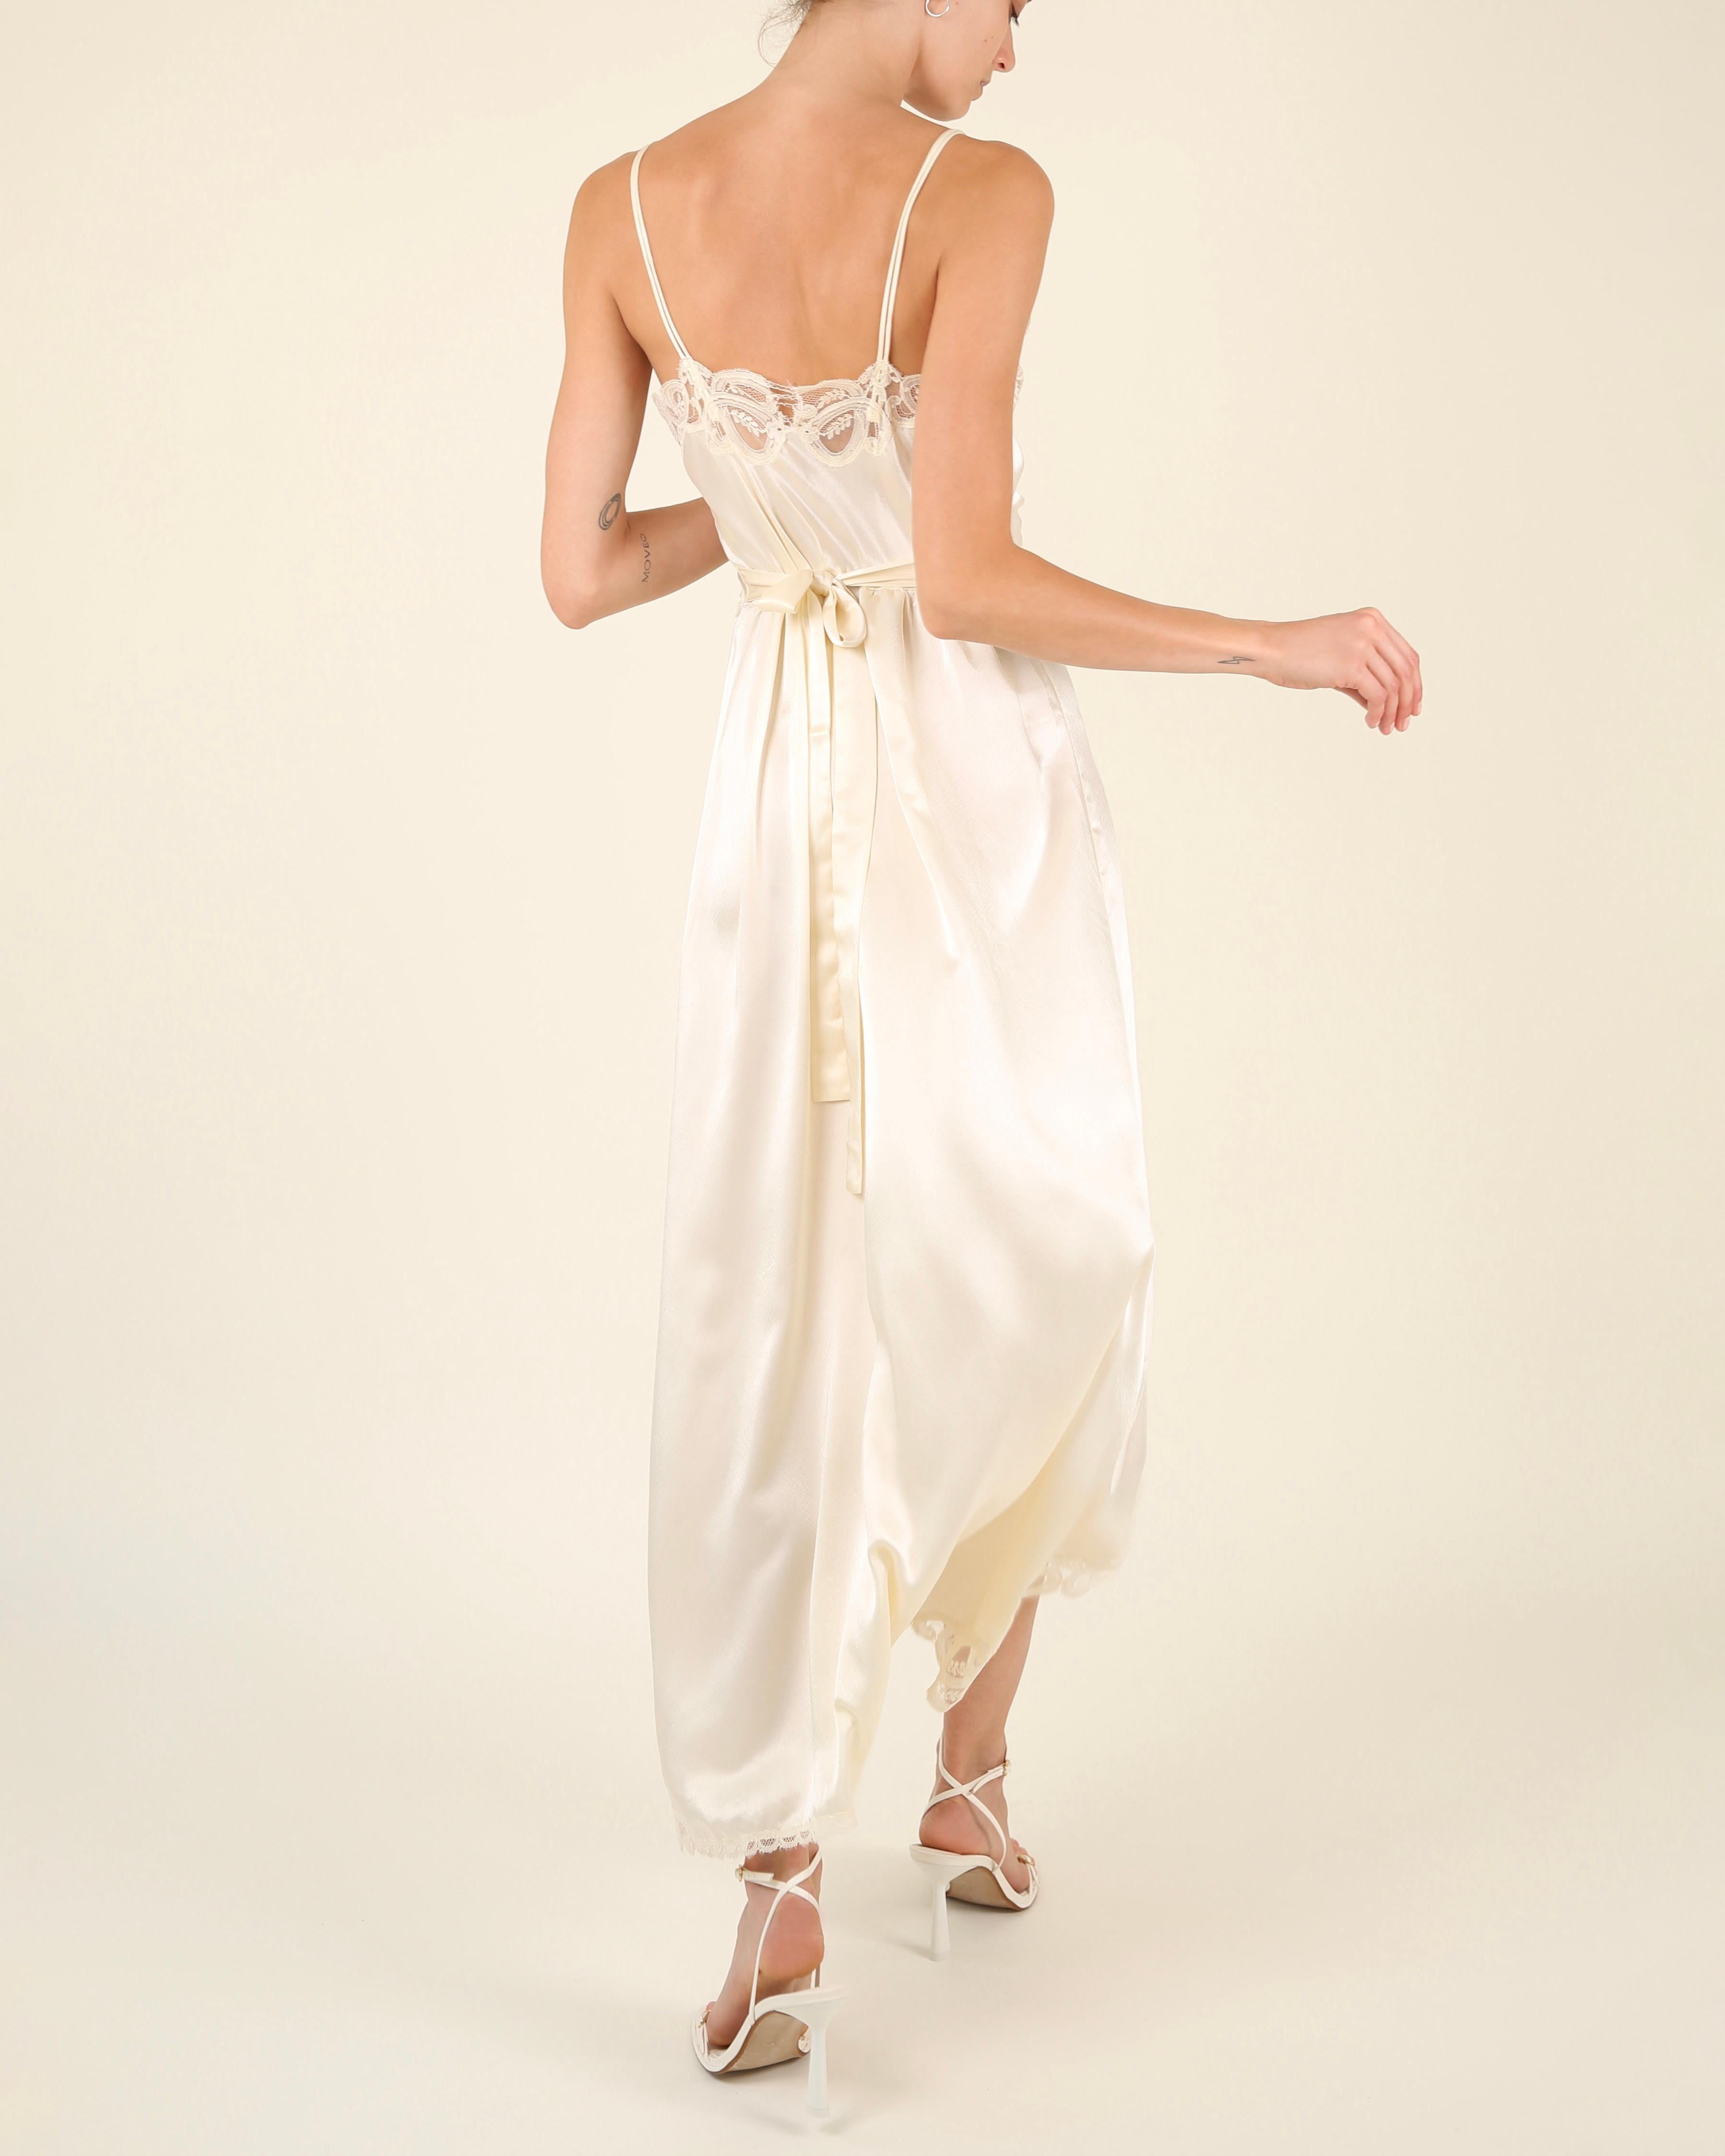 Eve Stillman vintage silk ivory cream lace slit night gown slip wedding dress 12